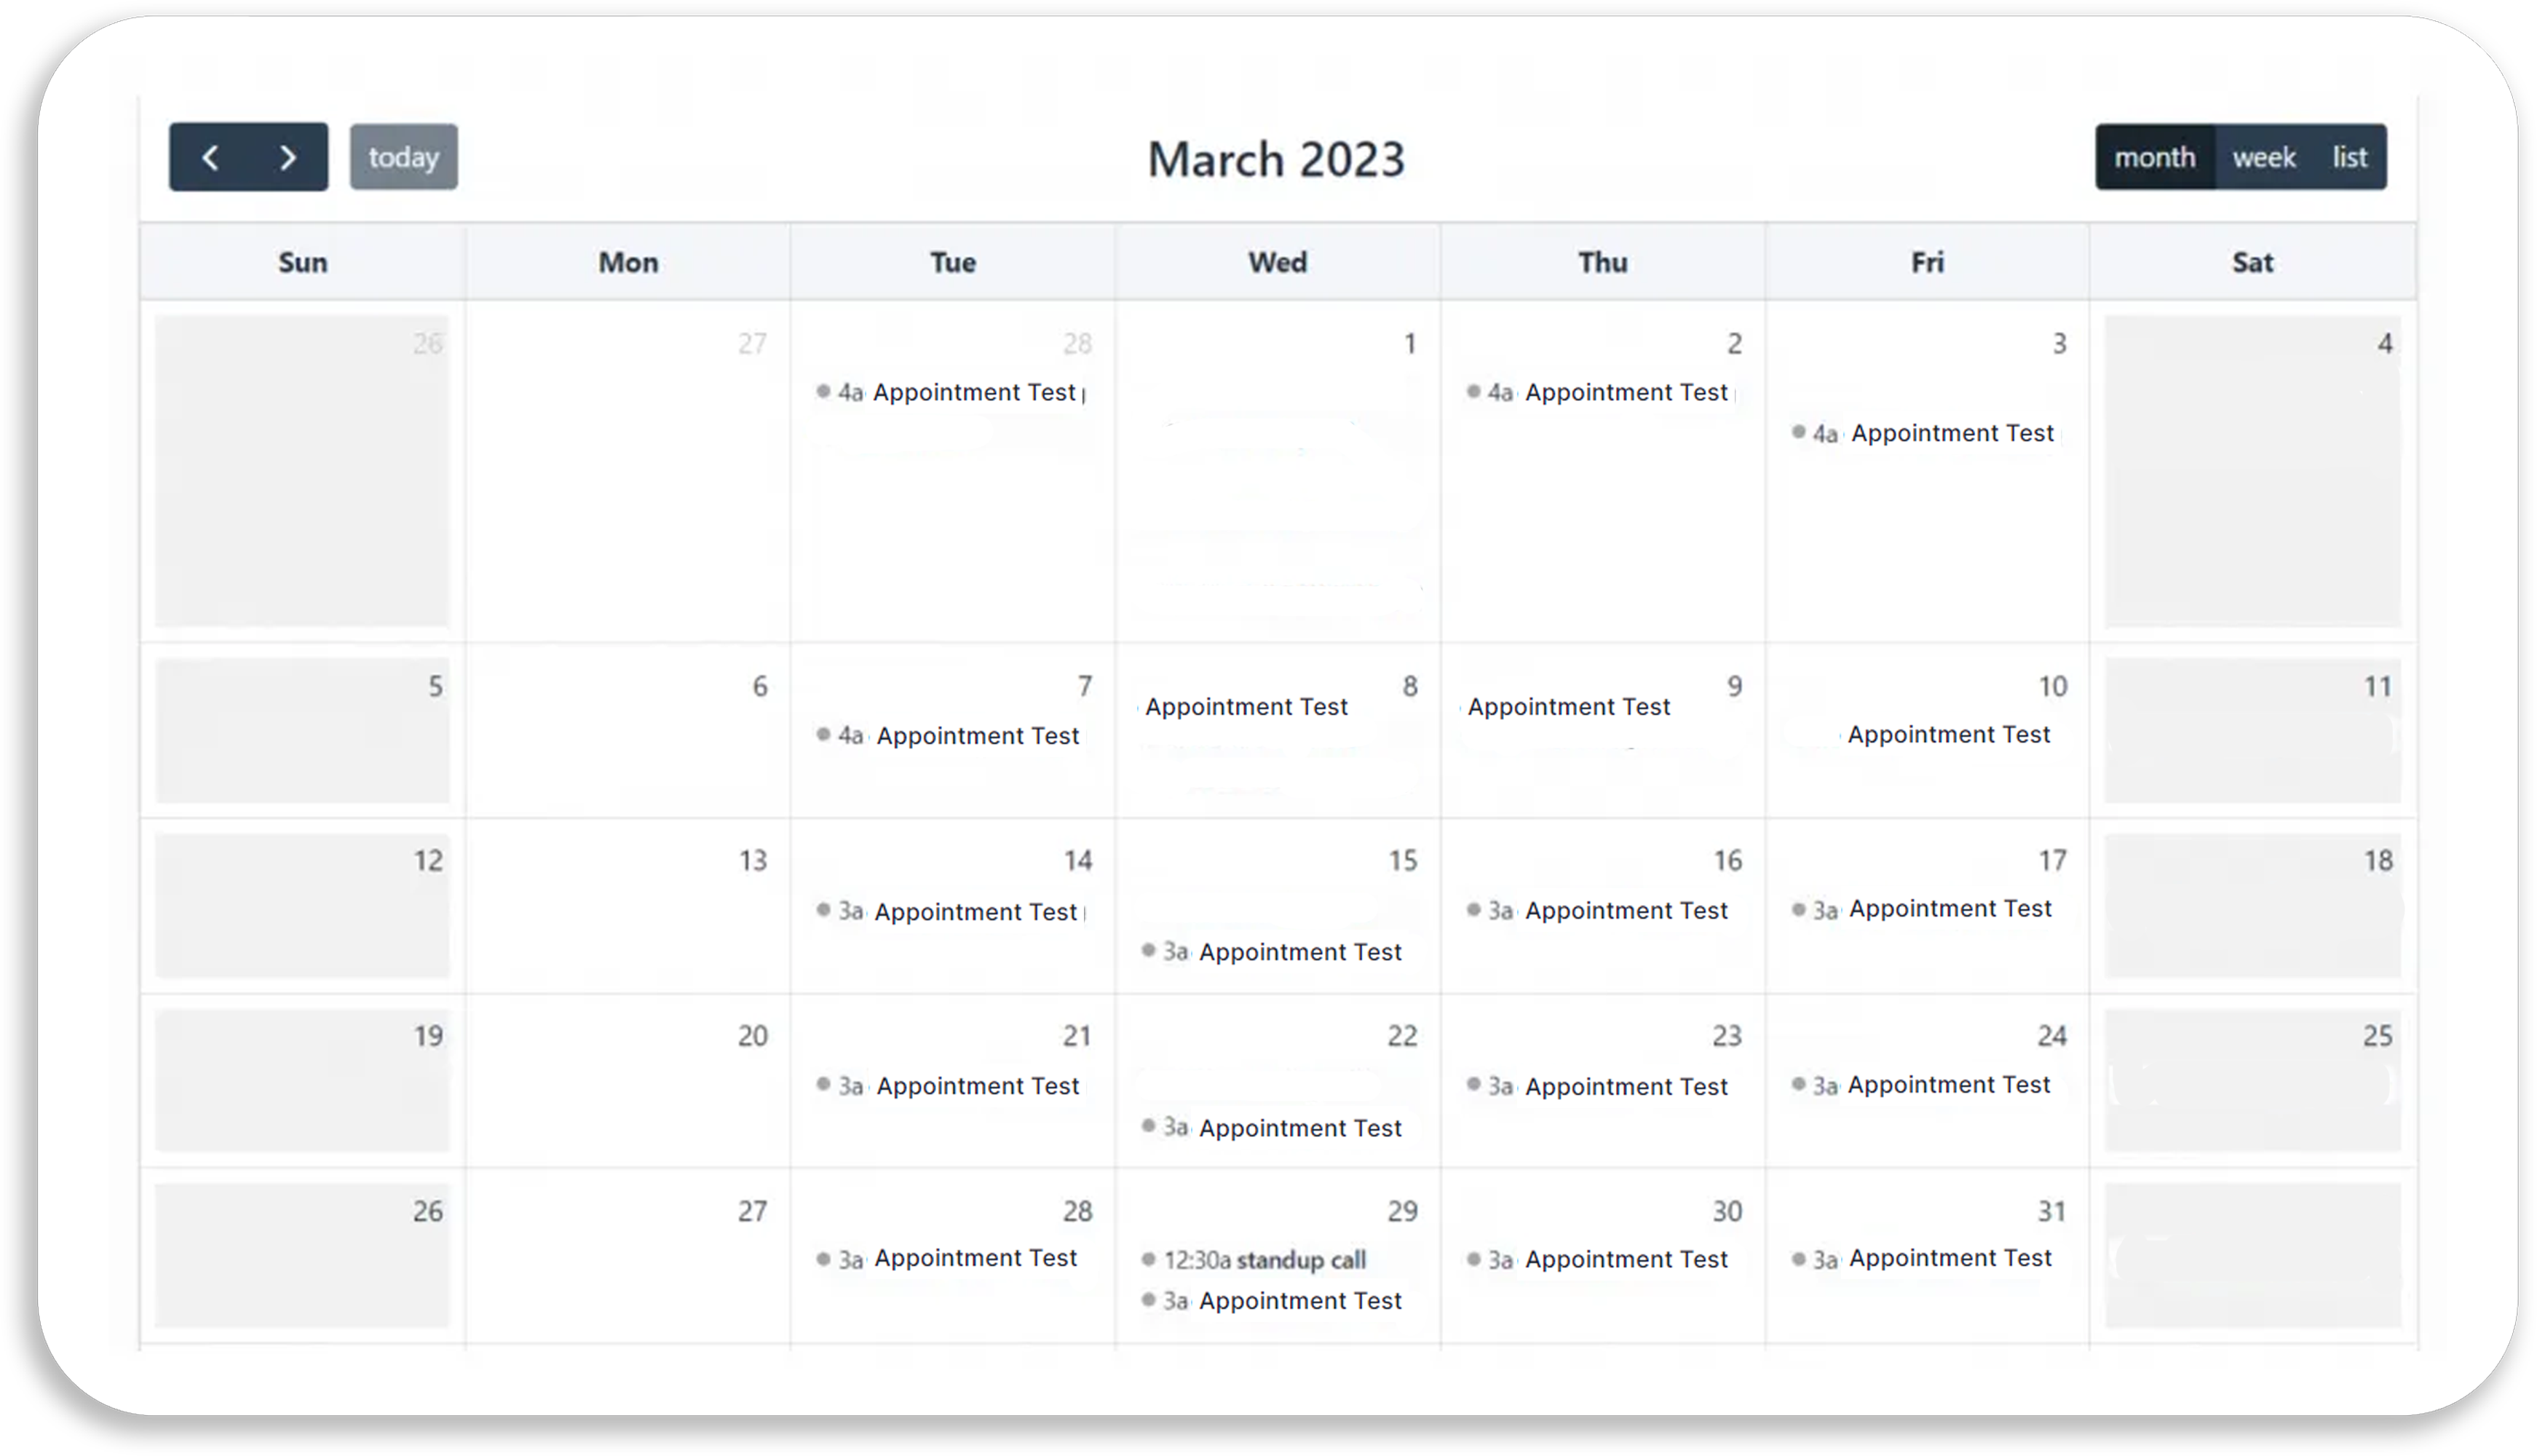 Sync Redtail Calendar with Outlook & Google Calendar